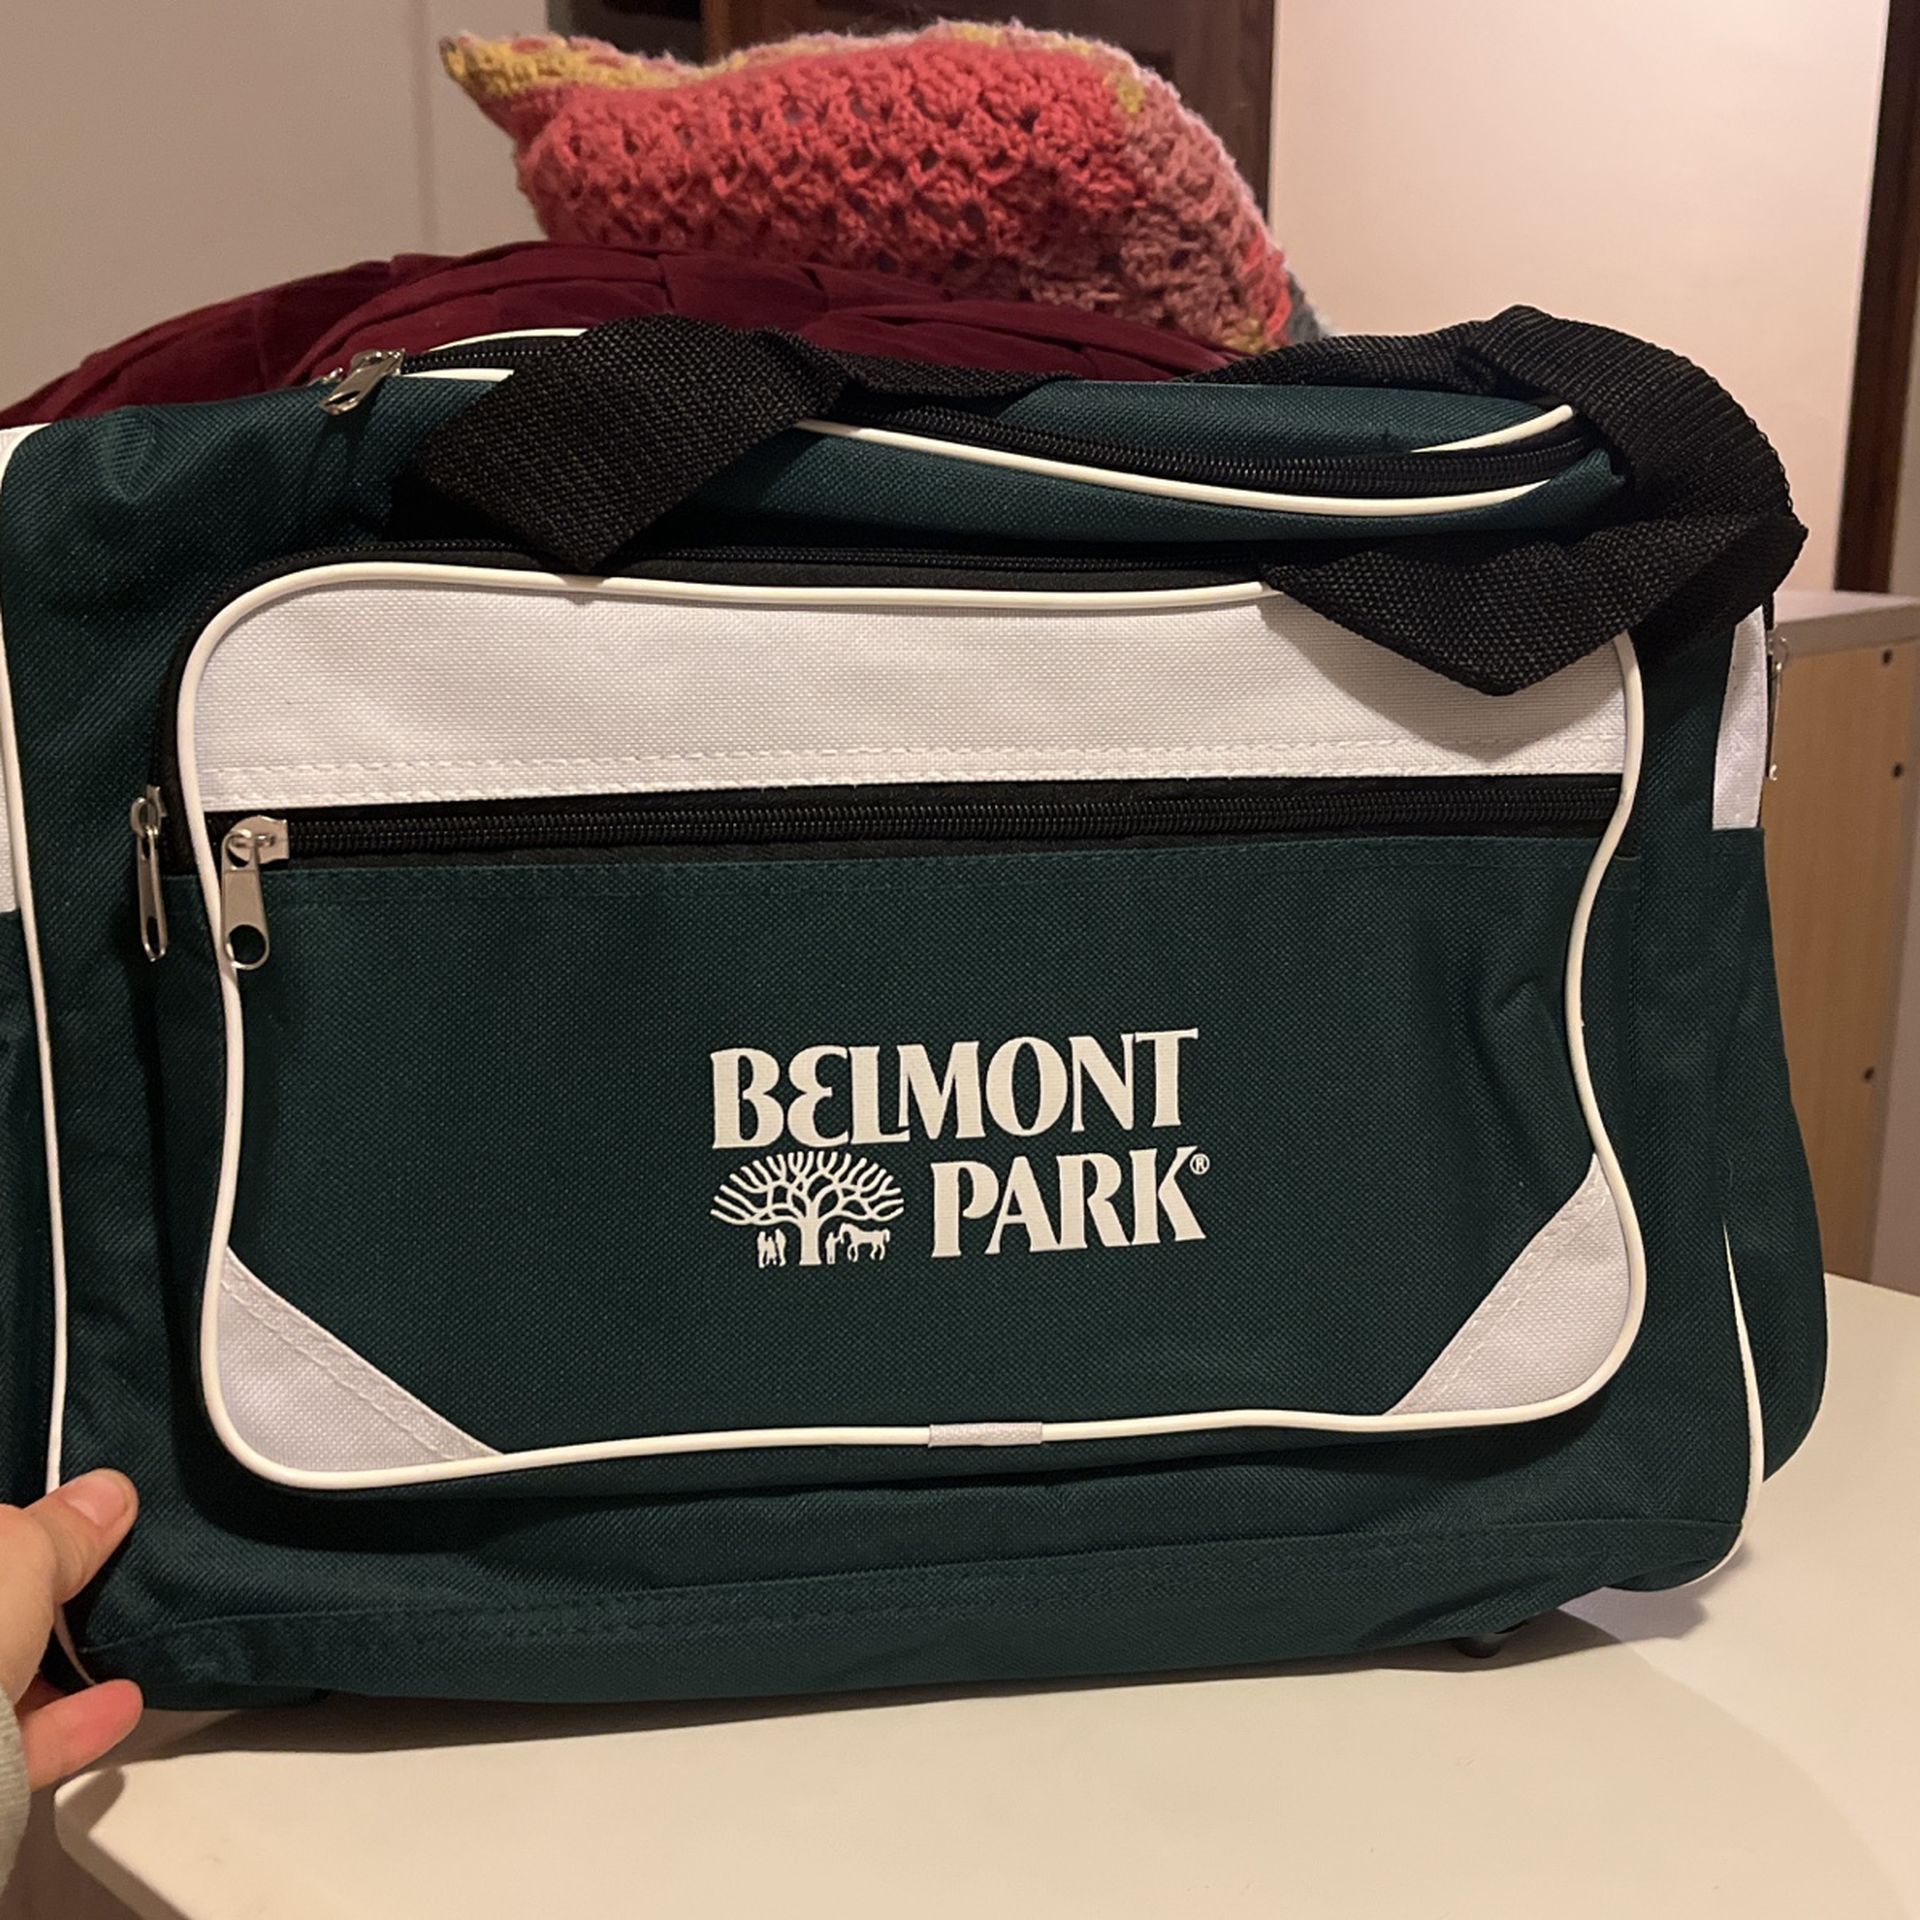 Belmont Park Tote Bag